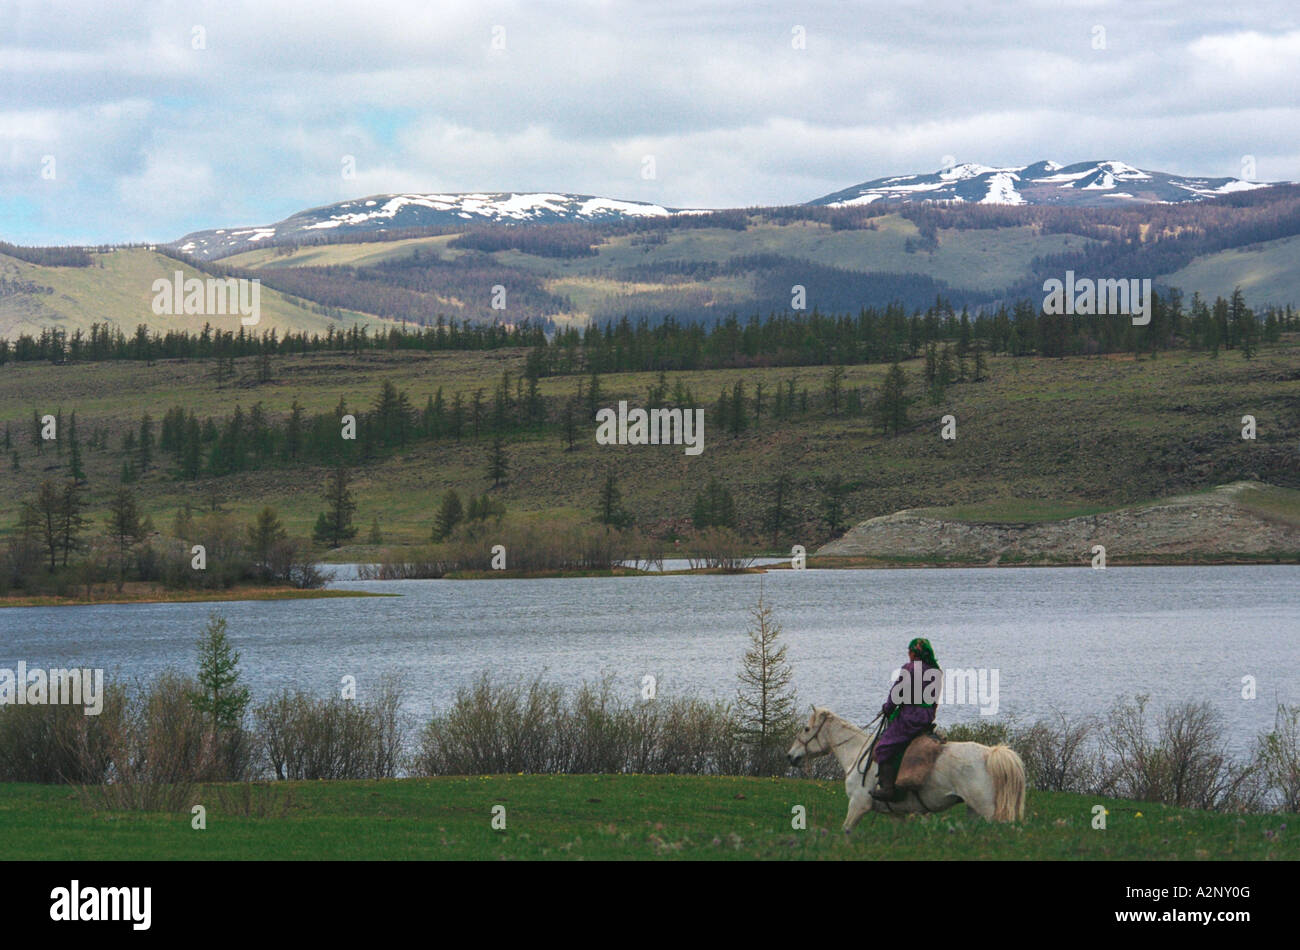 Woman on horseback. Dood Nuur lake and Shishkhid Gol river. Darhadyn Wetland. Khovsgol aimag (province). North Mongolia Stock Photo